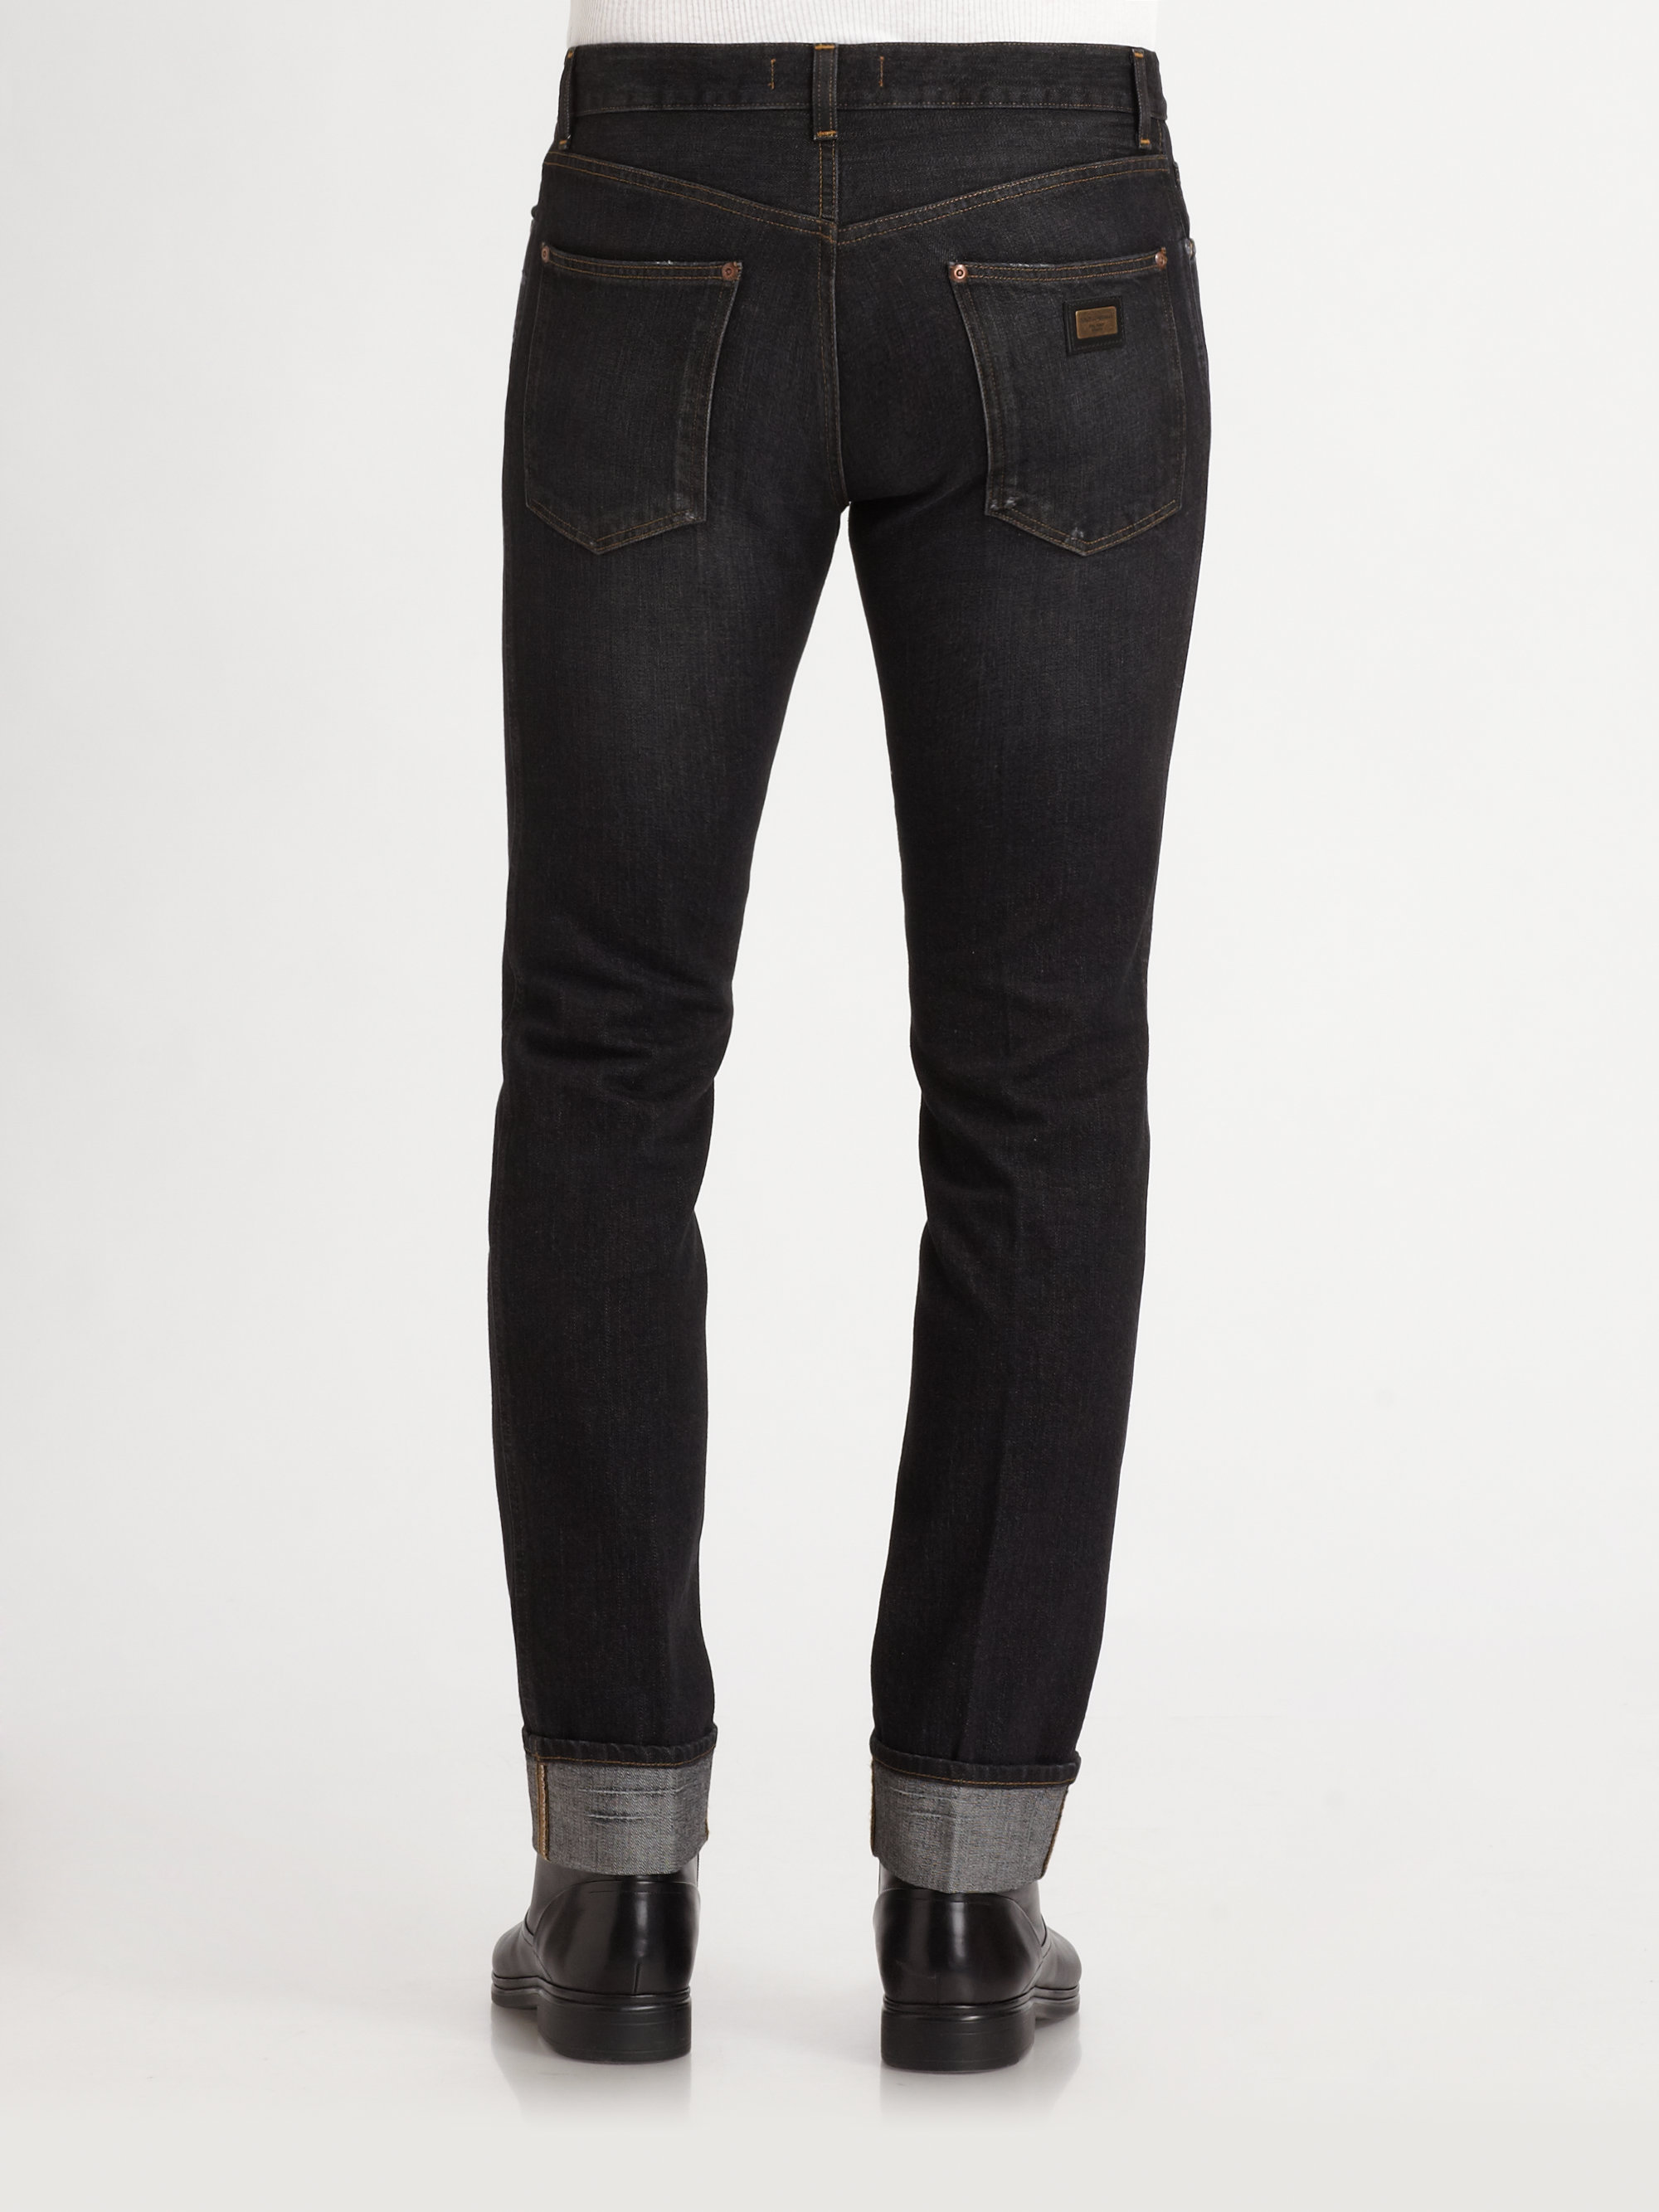 Dolce & Gabbana Gold-Fit Denim Jeans in Black for Men - Lyst